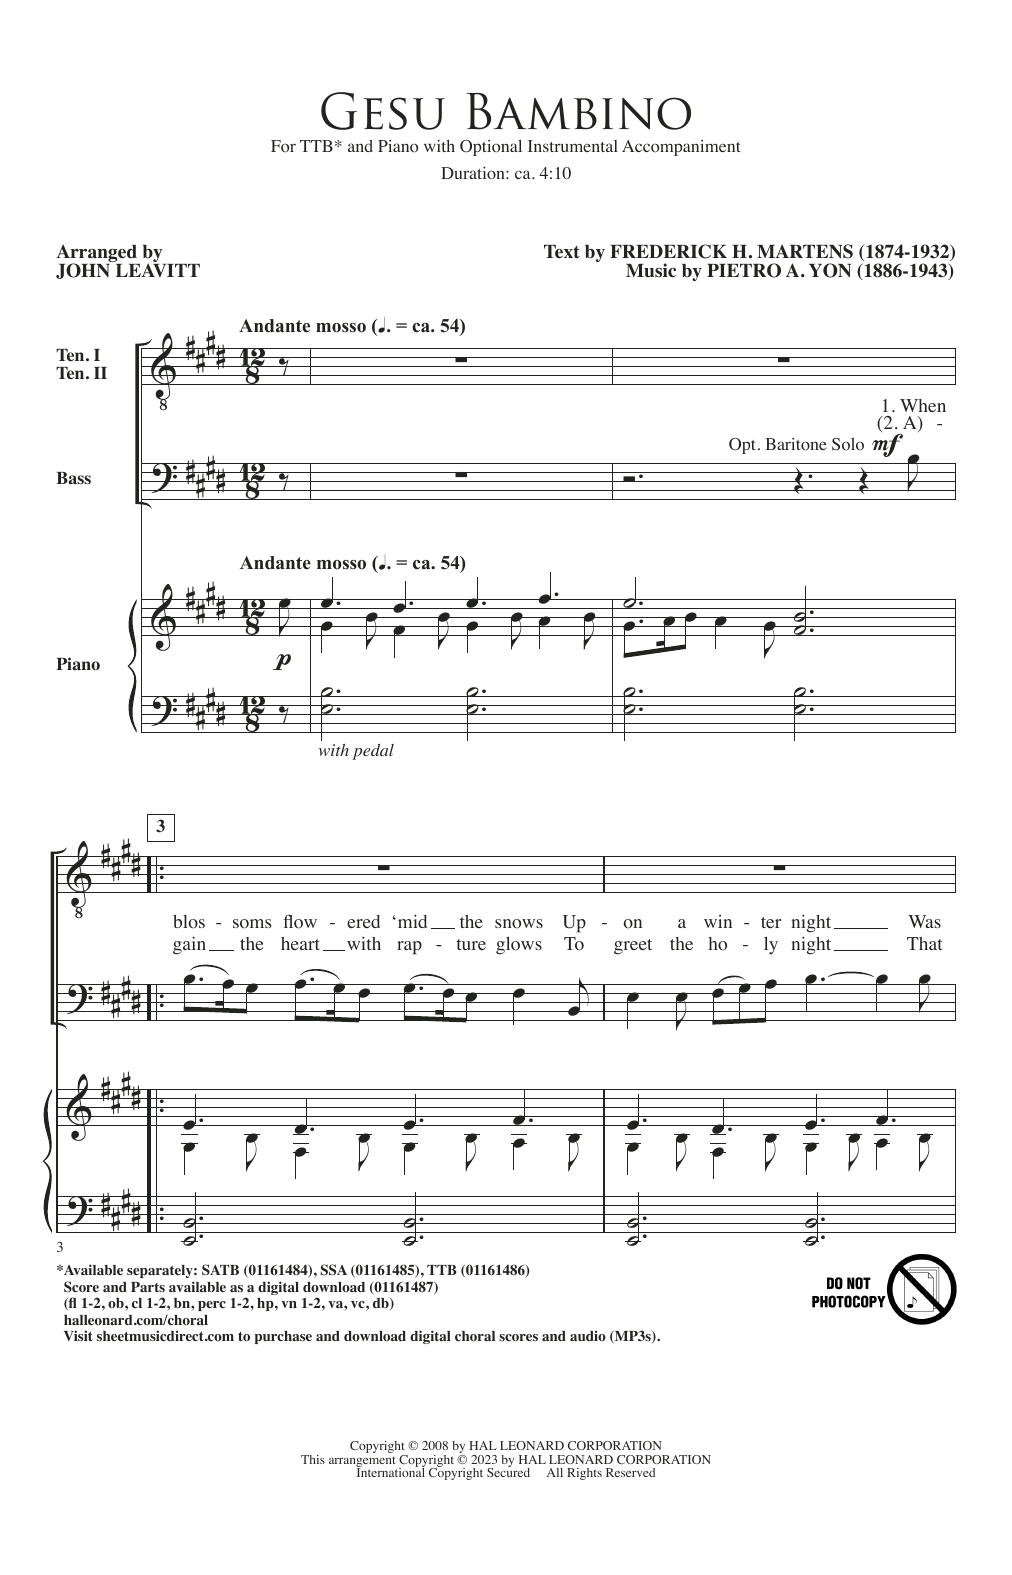 Pietro A. Yon Gesú Bambino (arr. John Leavitt) Sheet Music Notes & Chords for Choir - Download or Print PDF